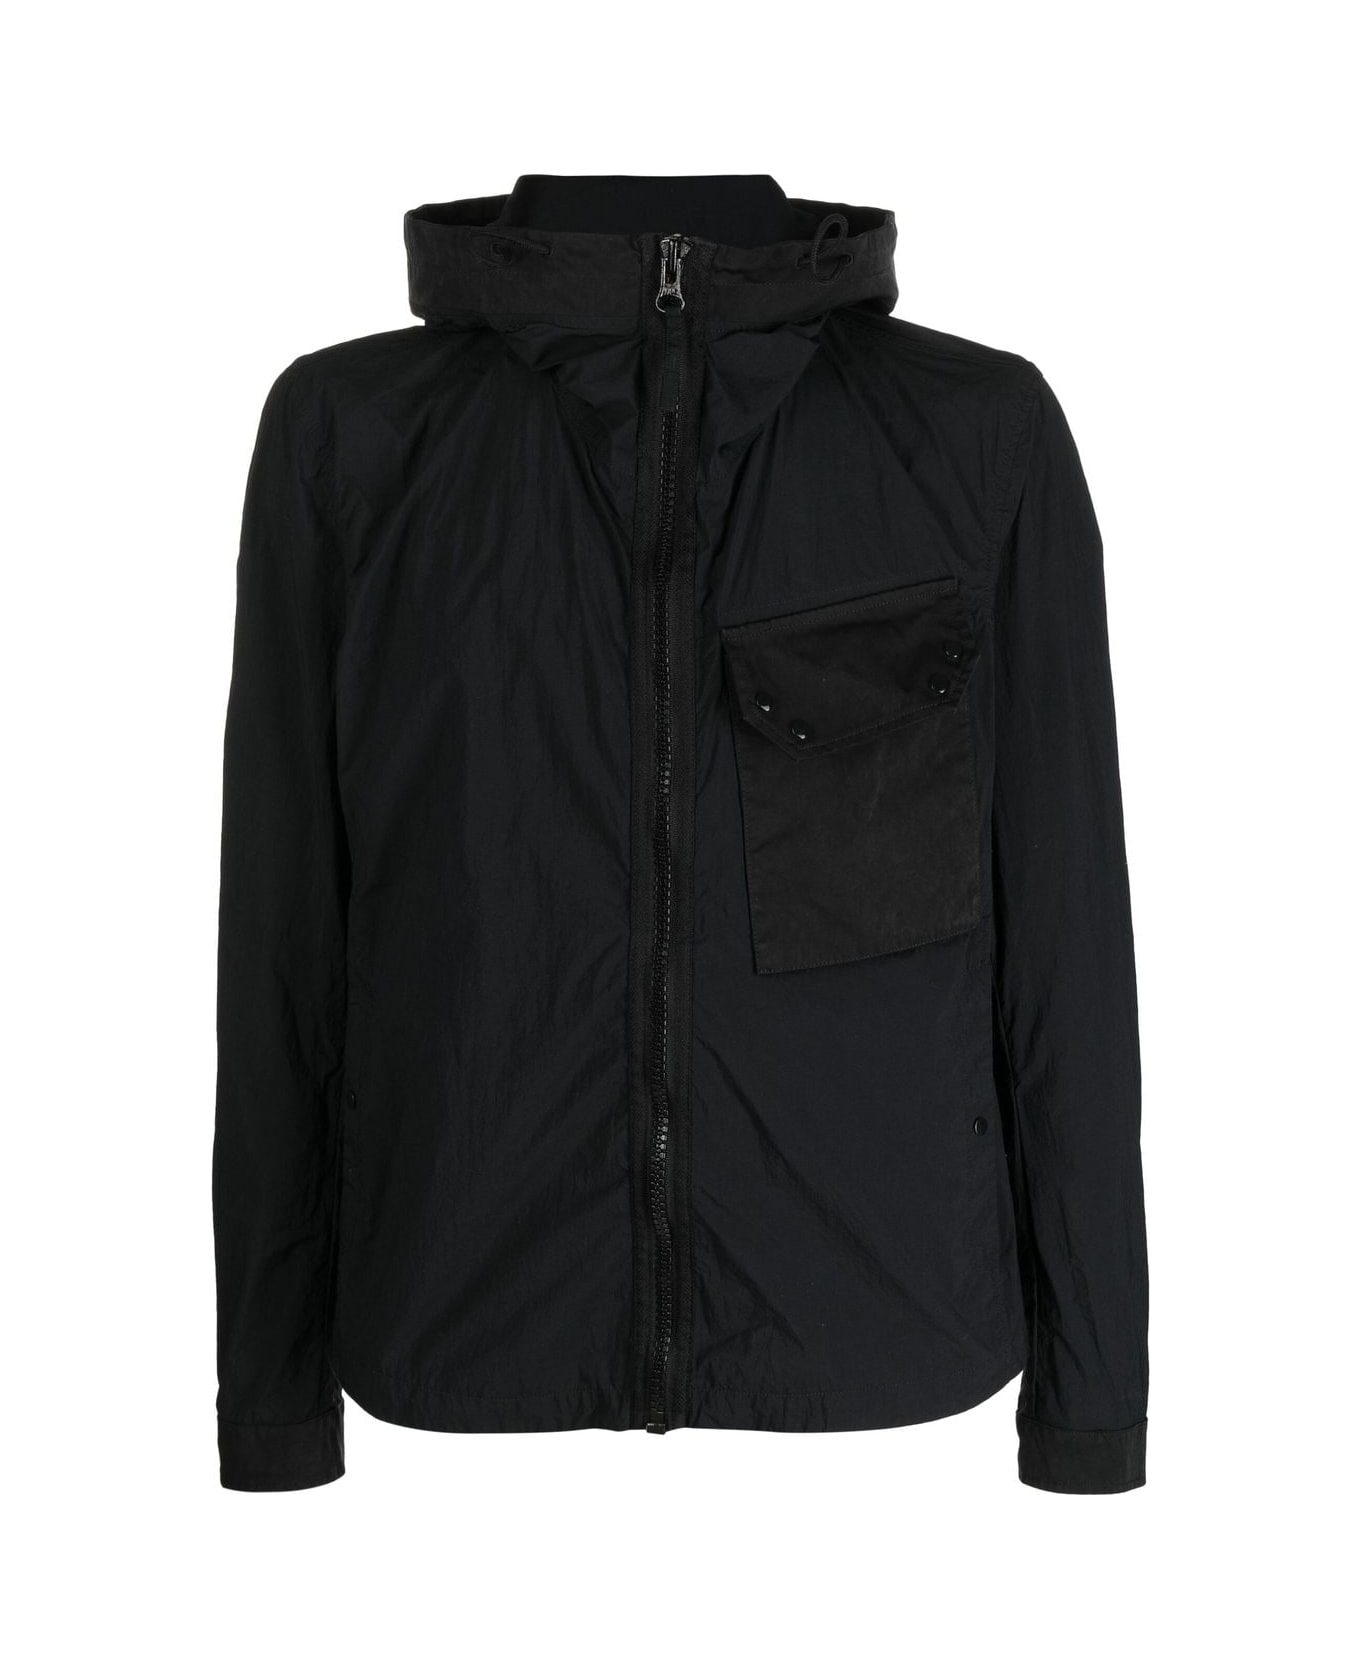 Ten C Hooded Zip-up Jacket In Black Technical Fabric Man - Black